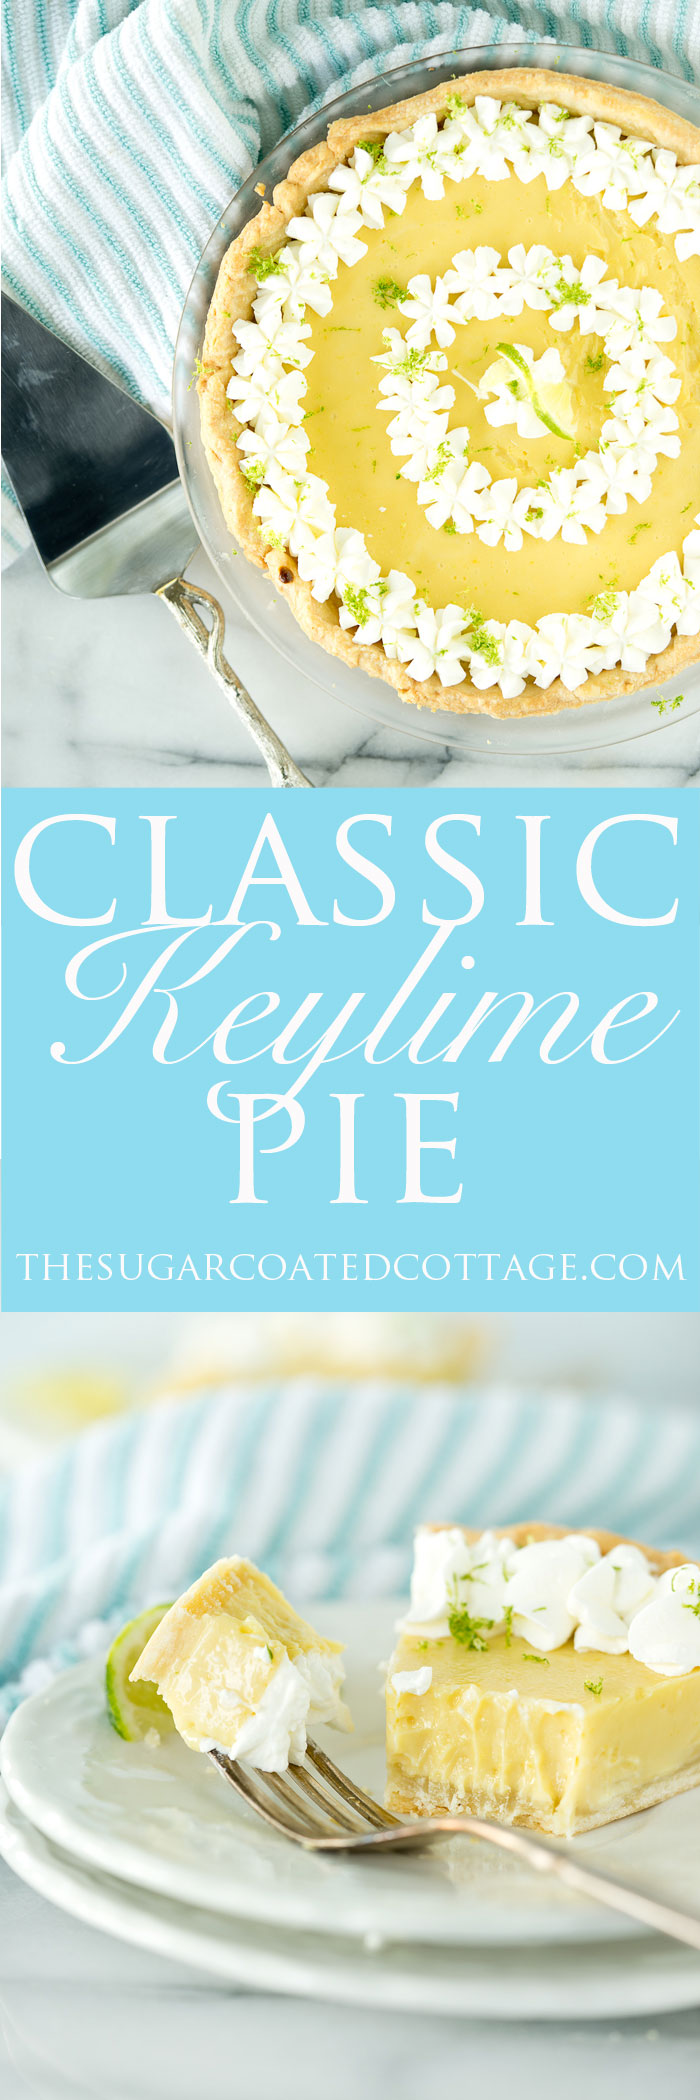 Classic Key Lime Pie recipe! Sweet, tart, puckery goodness. | thesugarcoatedcottage.com